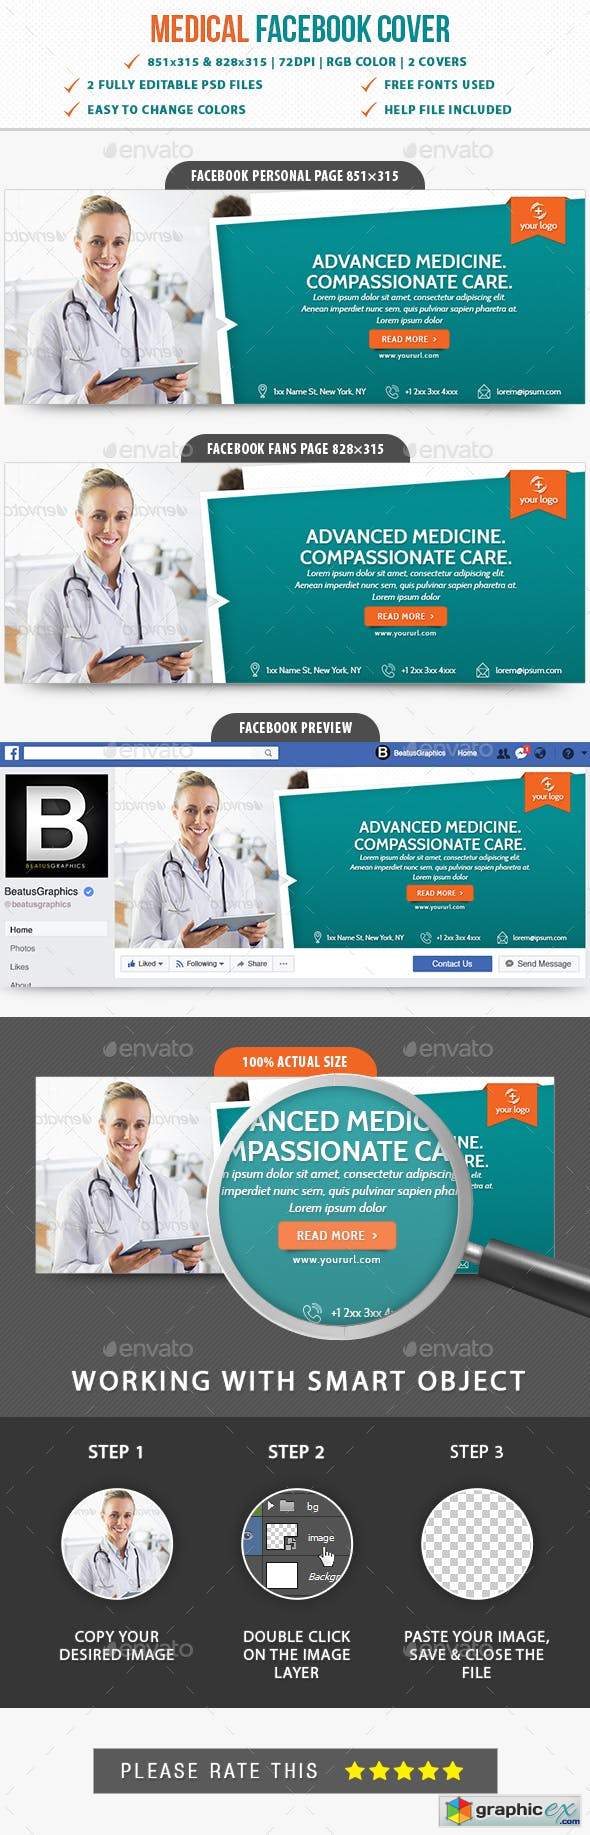 Medical Facebook Cover